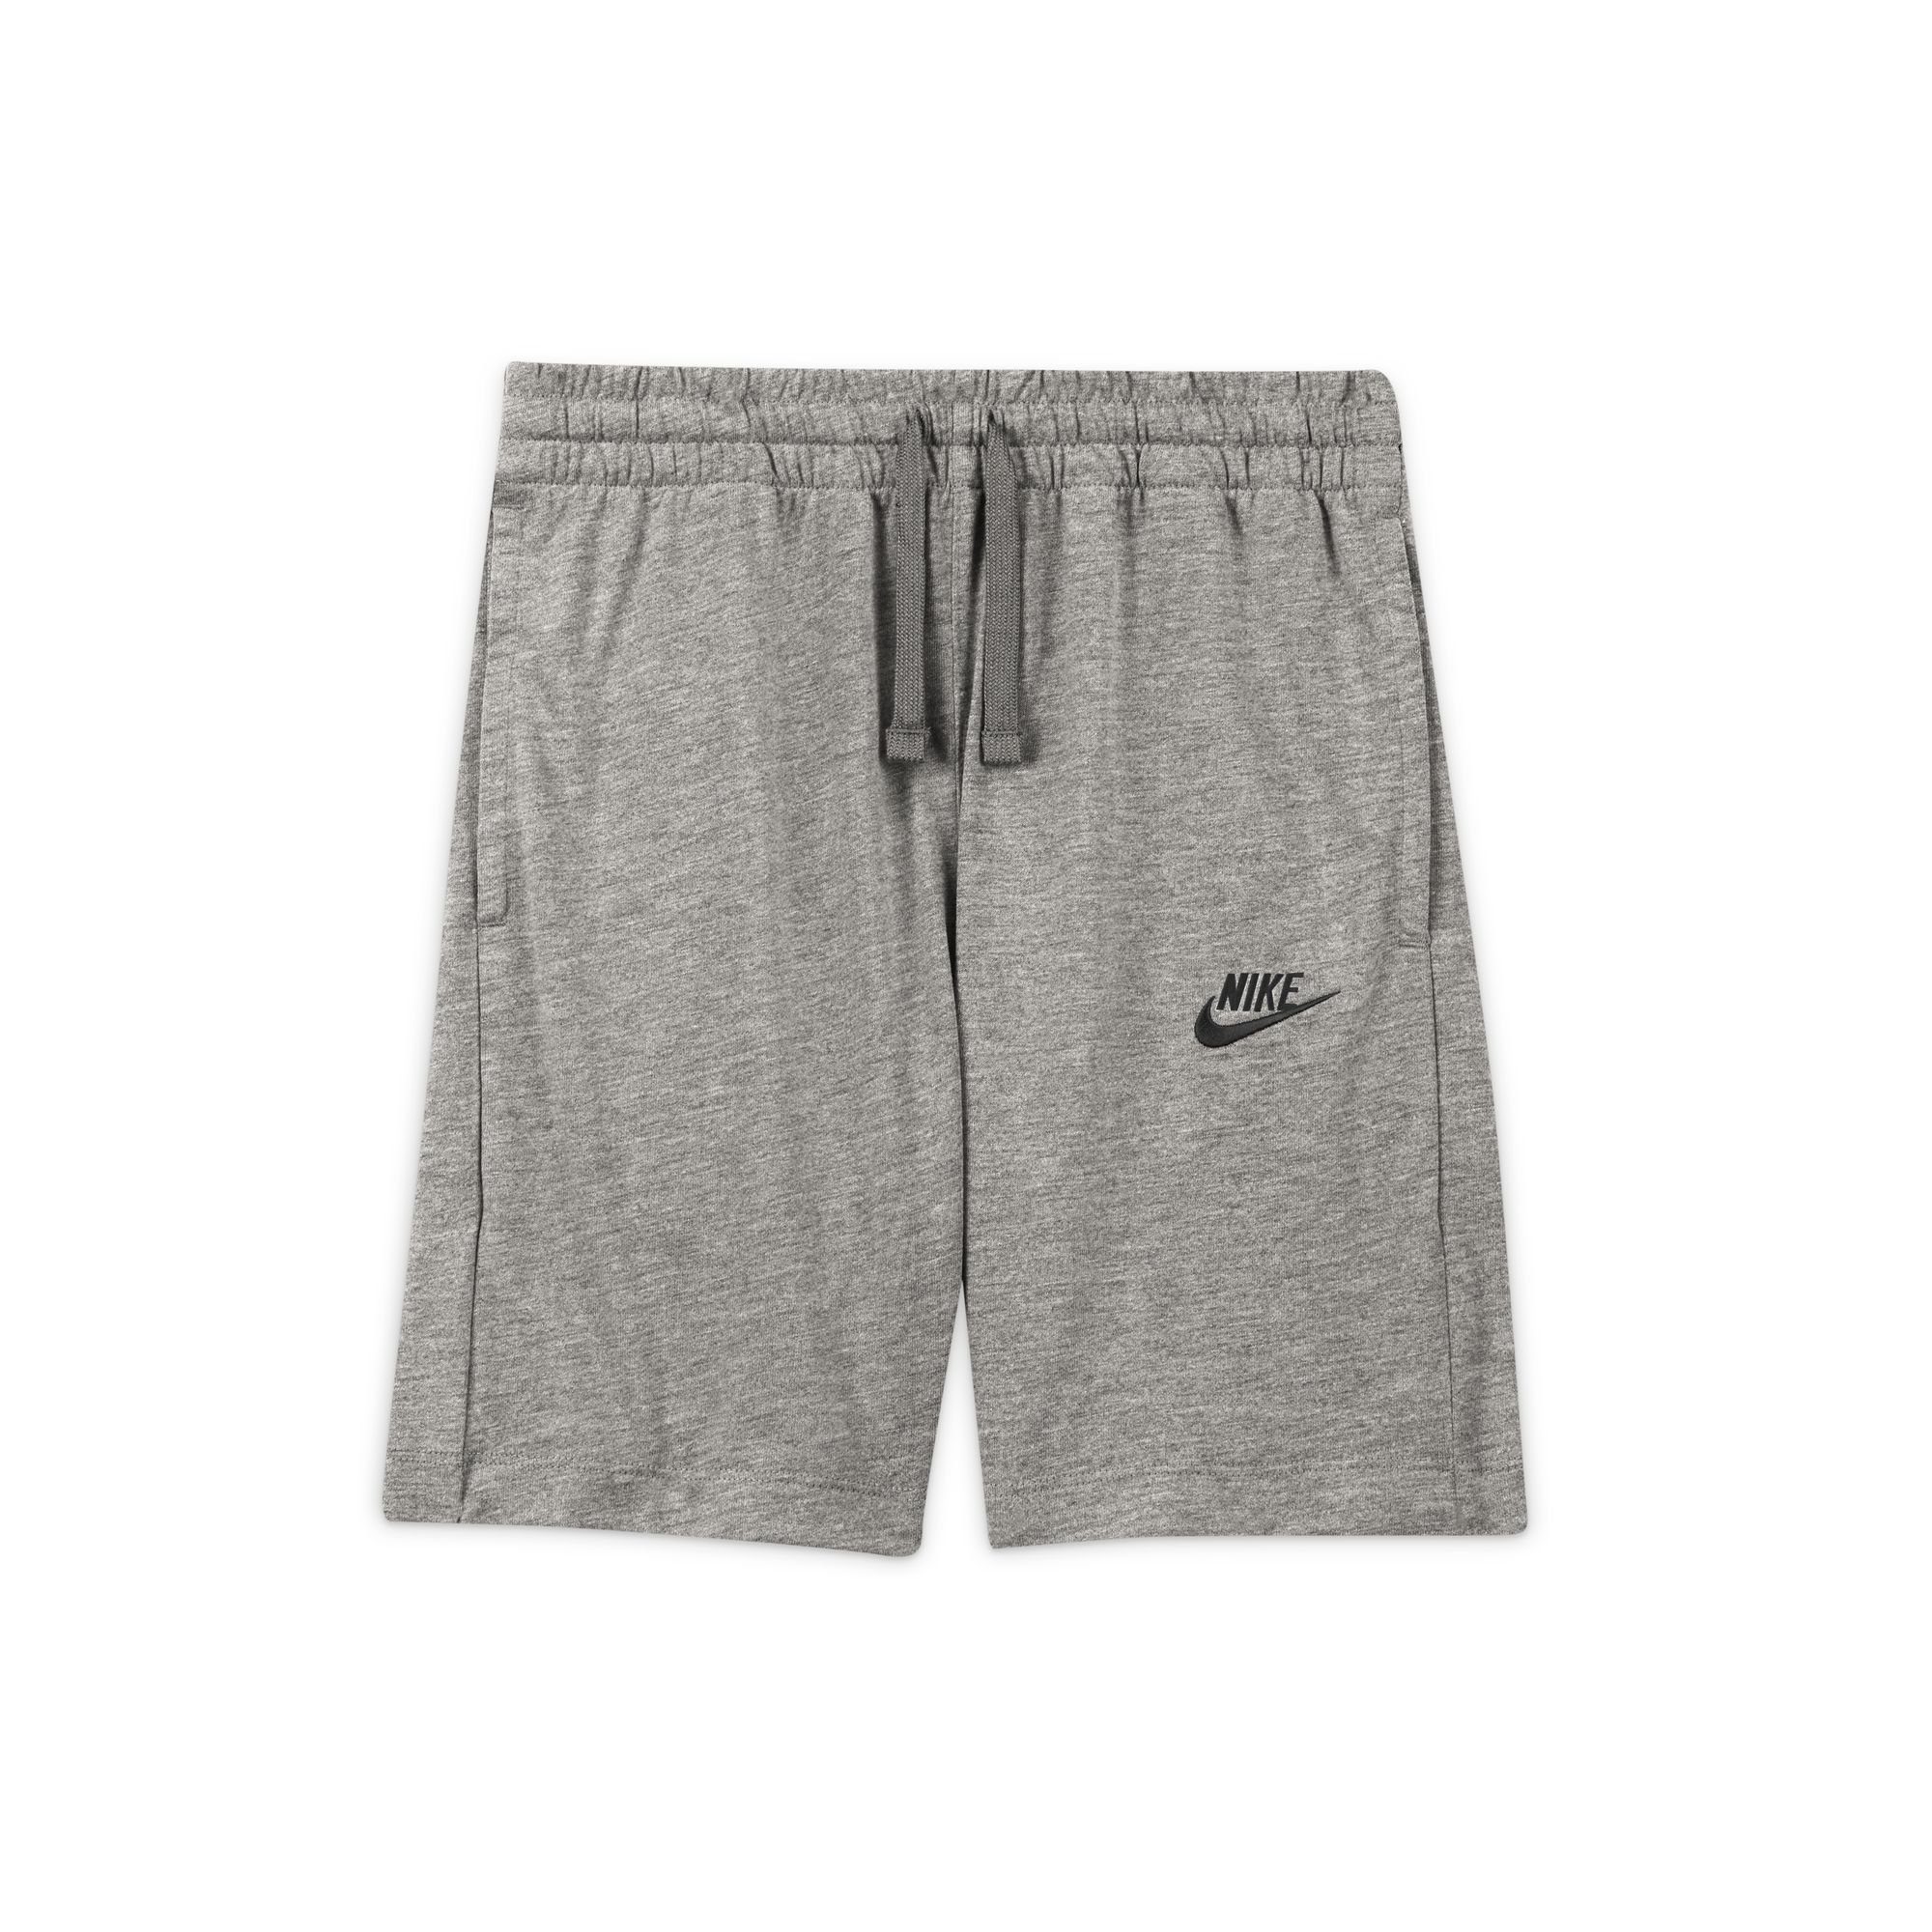 JERSEY Nike KIDS' BIG Shorts (BOYS) SHORTS grau Sportswear